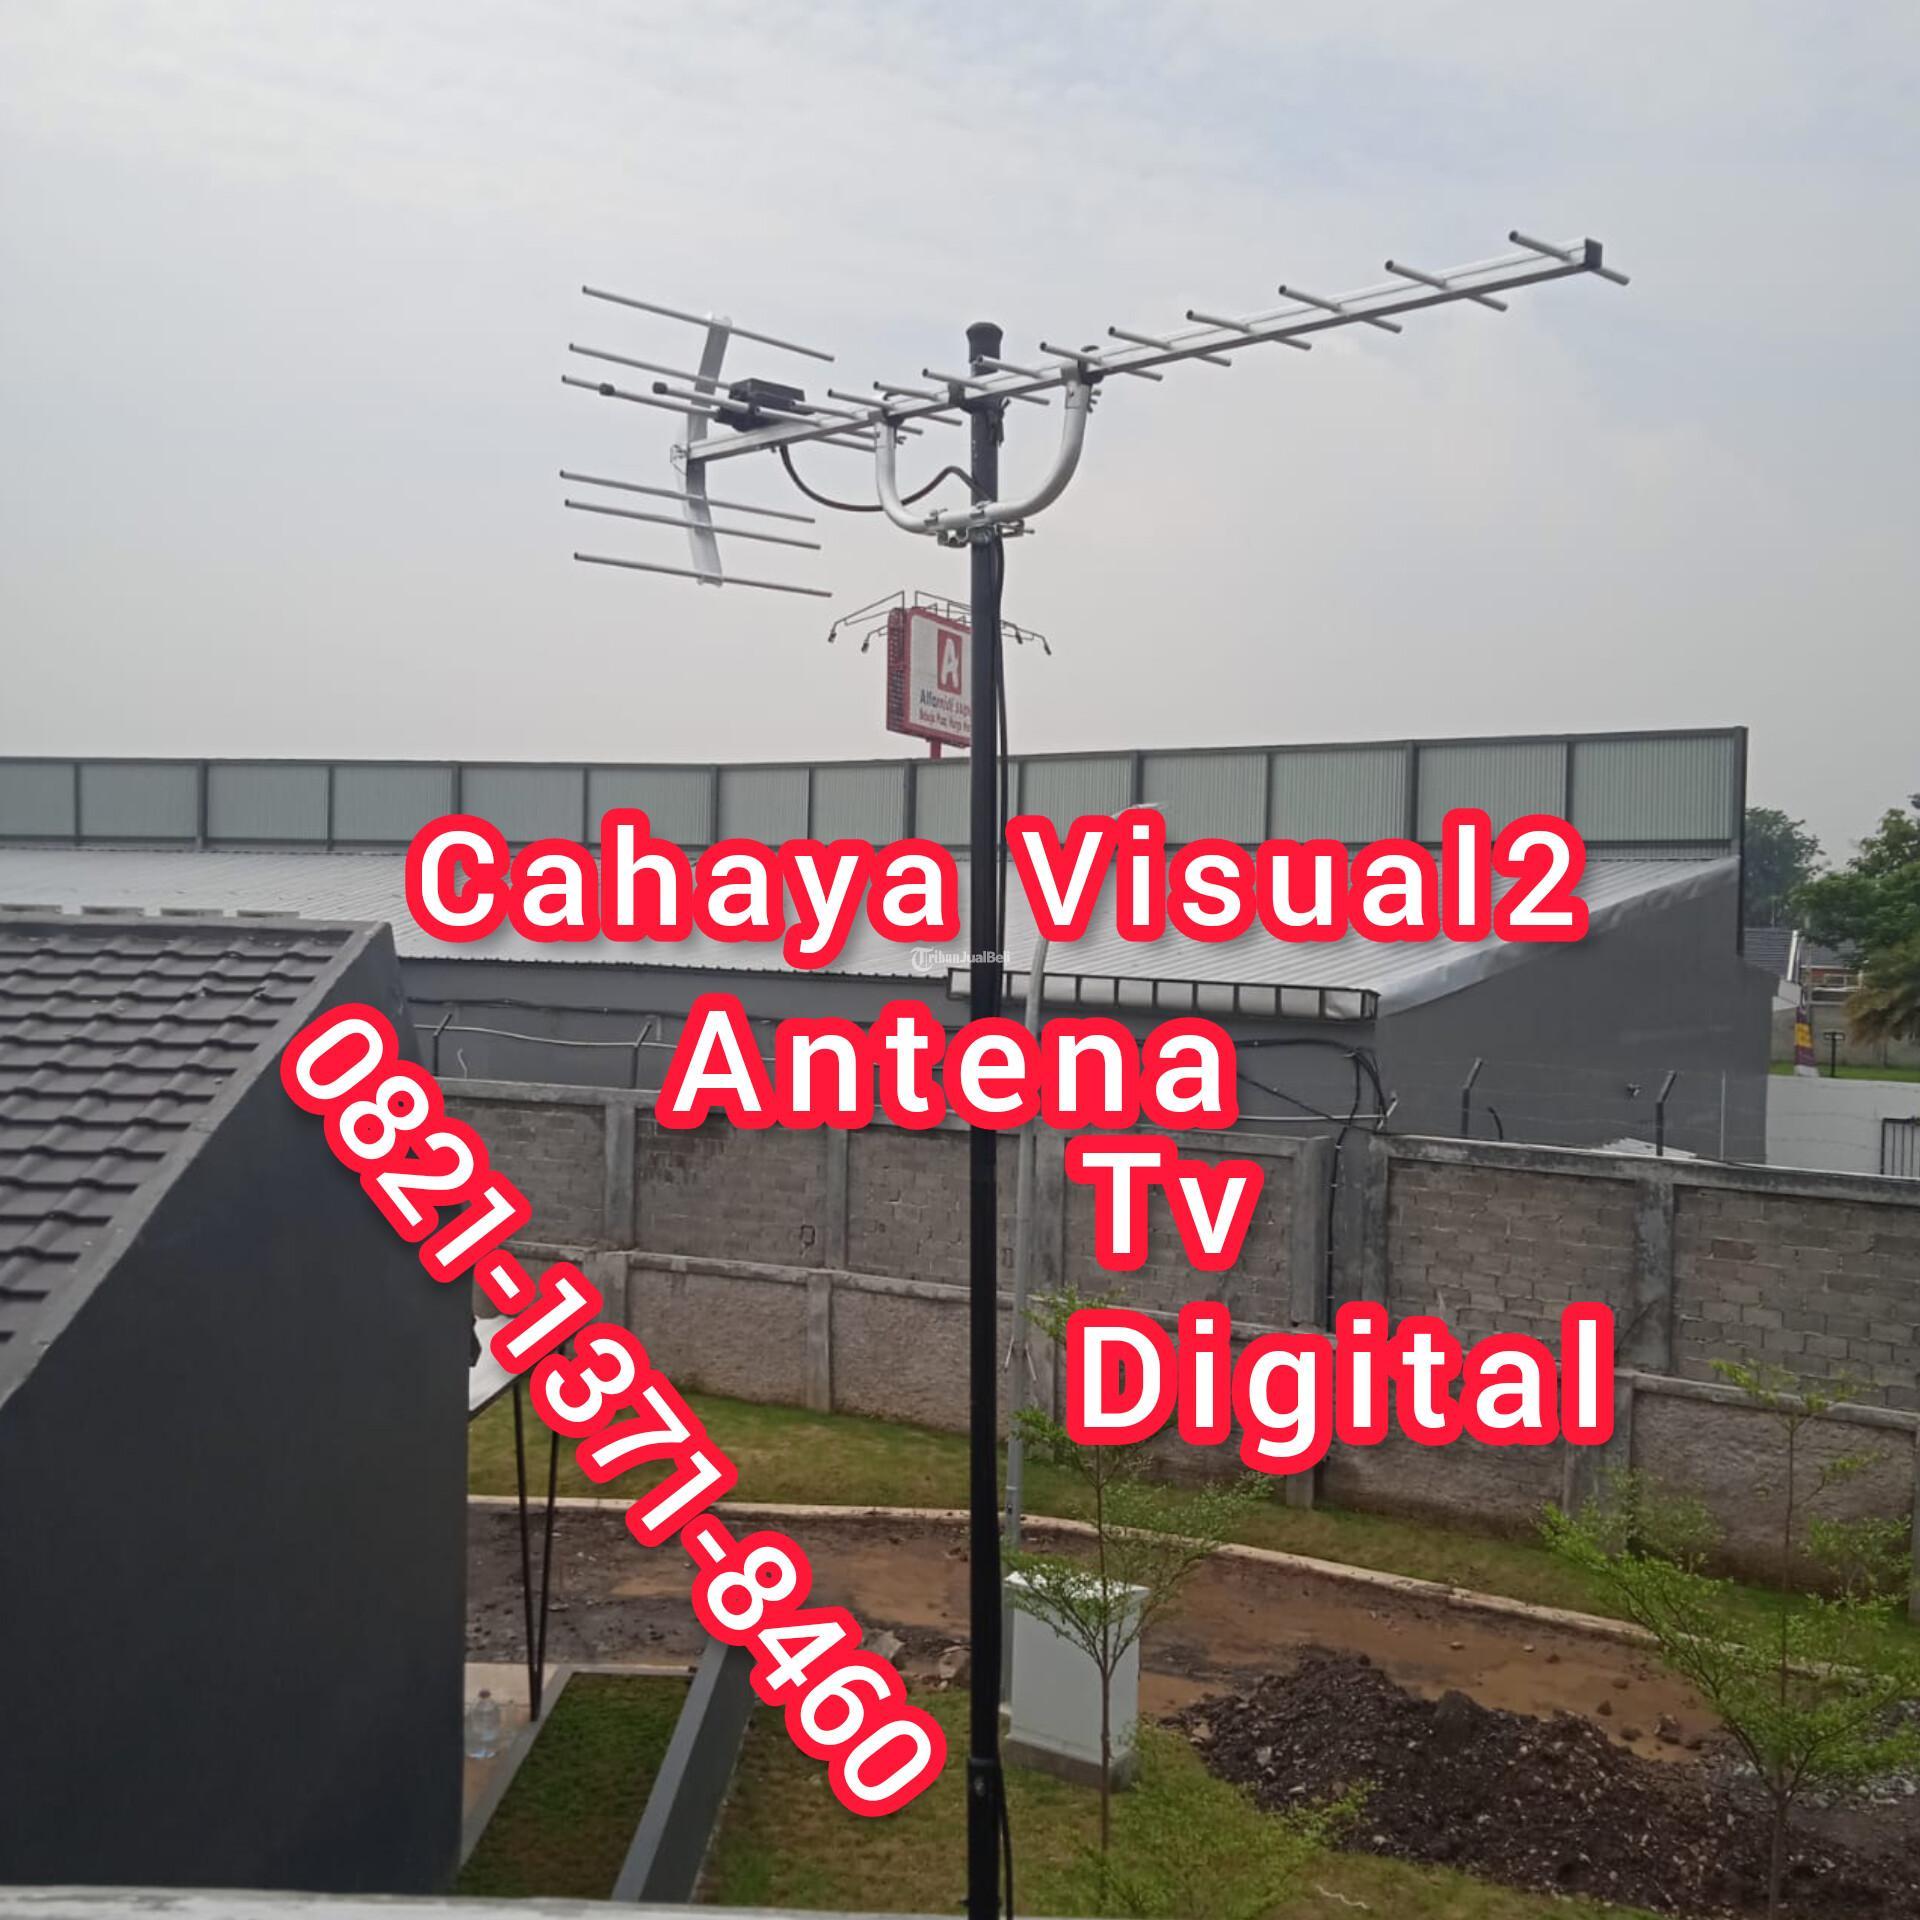 Ahli Jasa Pasang Antena Tv Digital Dan Stb Pondok Cabe Pamulang - Tangerang Selatan Banten